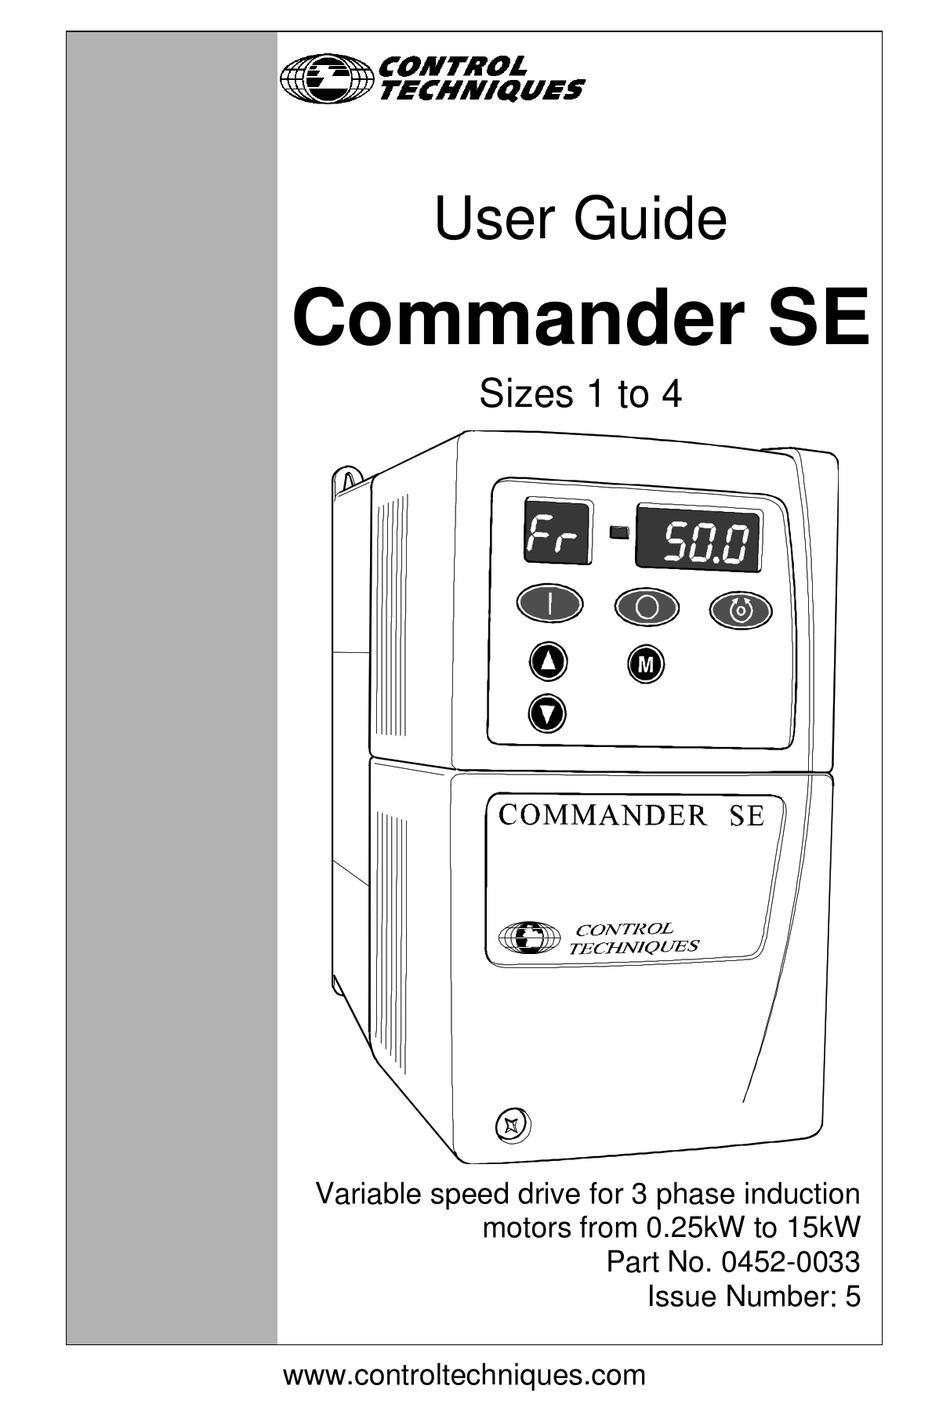 CONTROL TECHNIQUES COMMANDER SE SERIES USER MANUAL Pdf Download